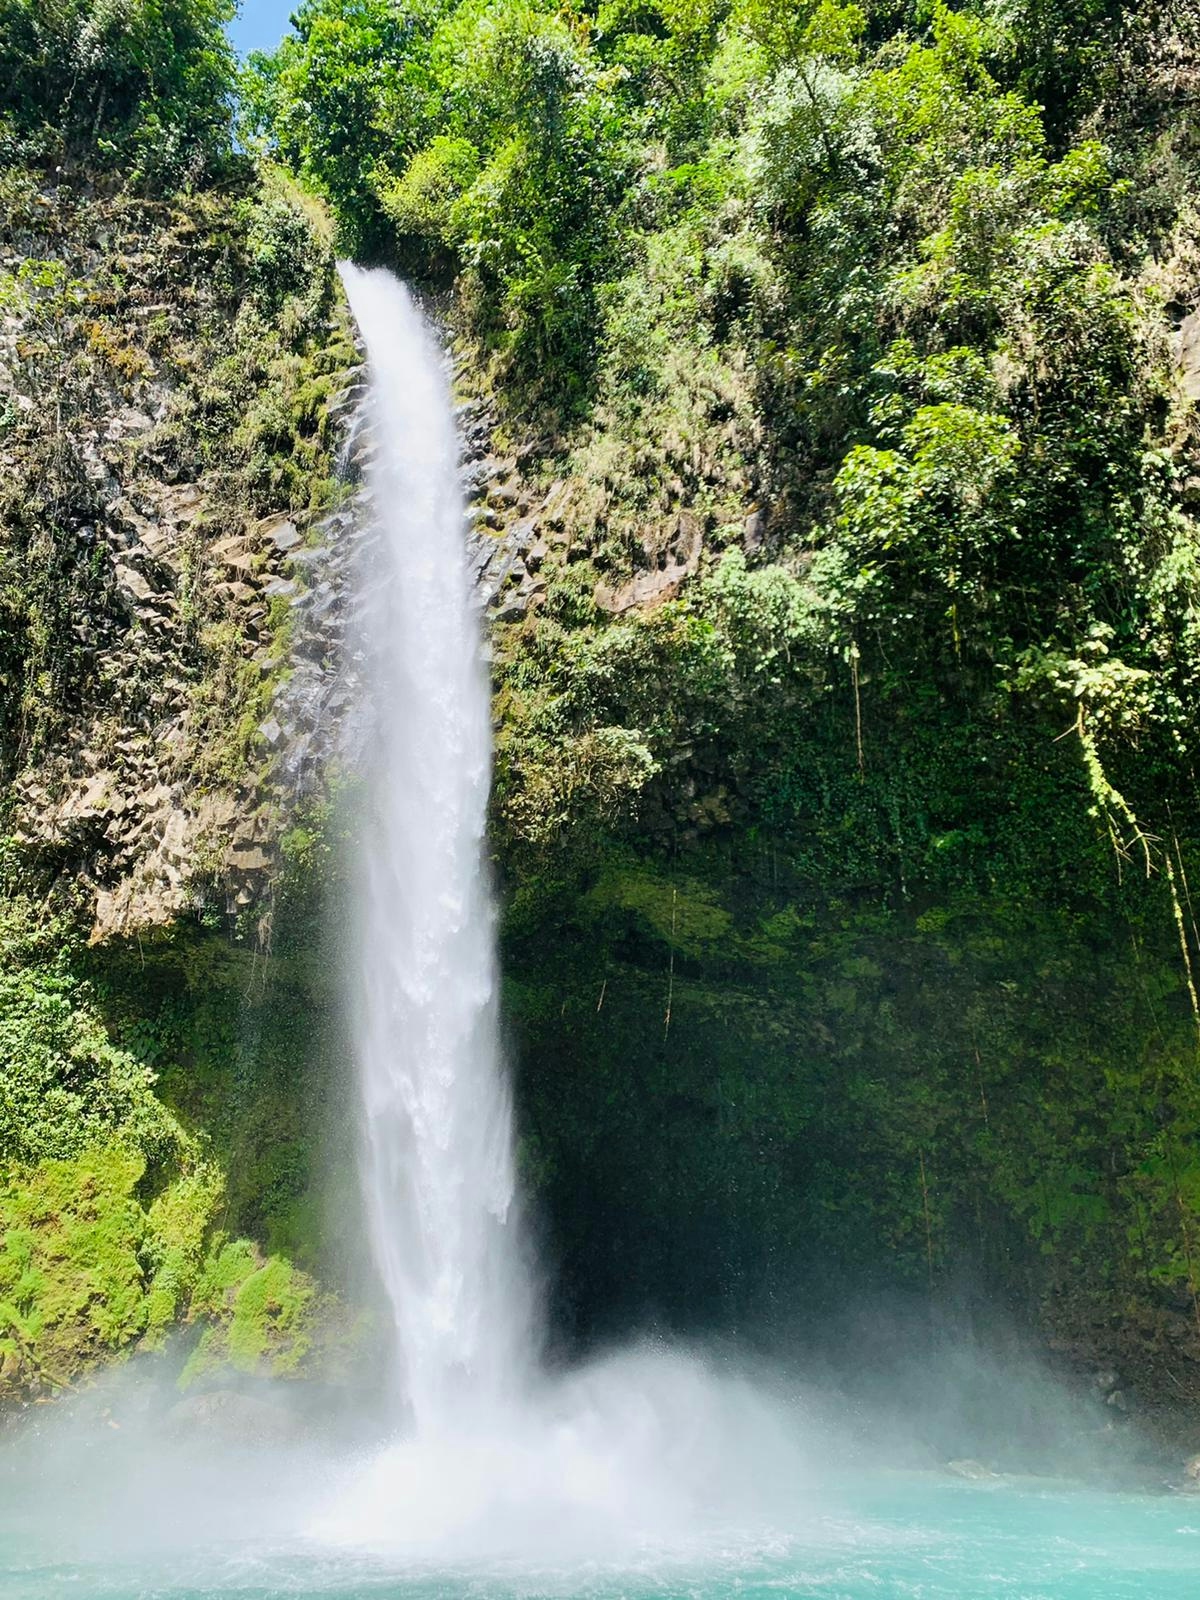 Waterfall taken at La Fortuna, Costa Rica